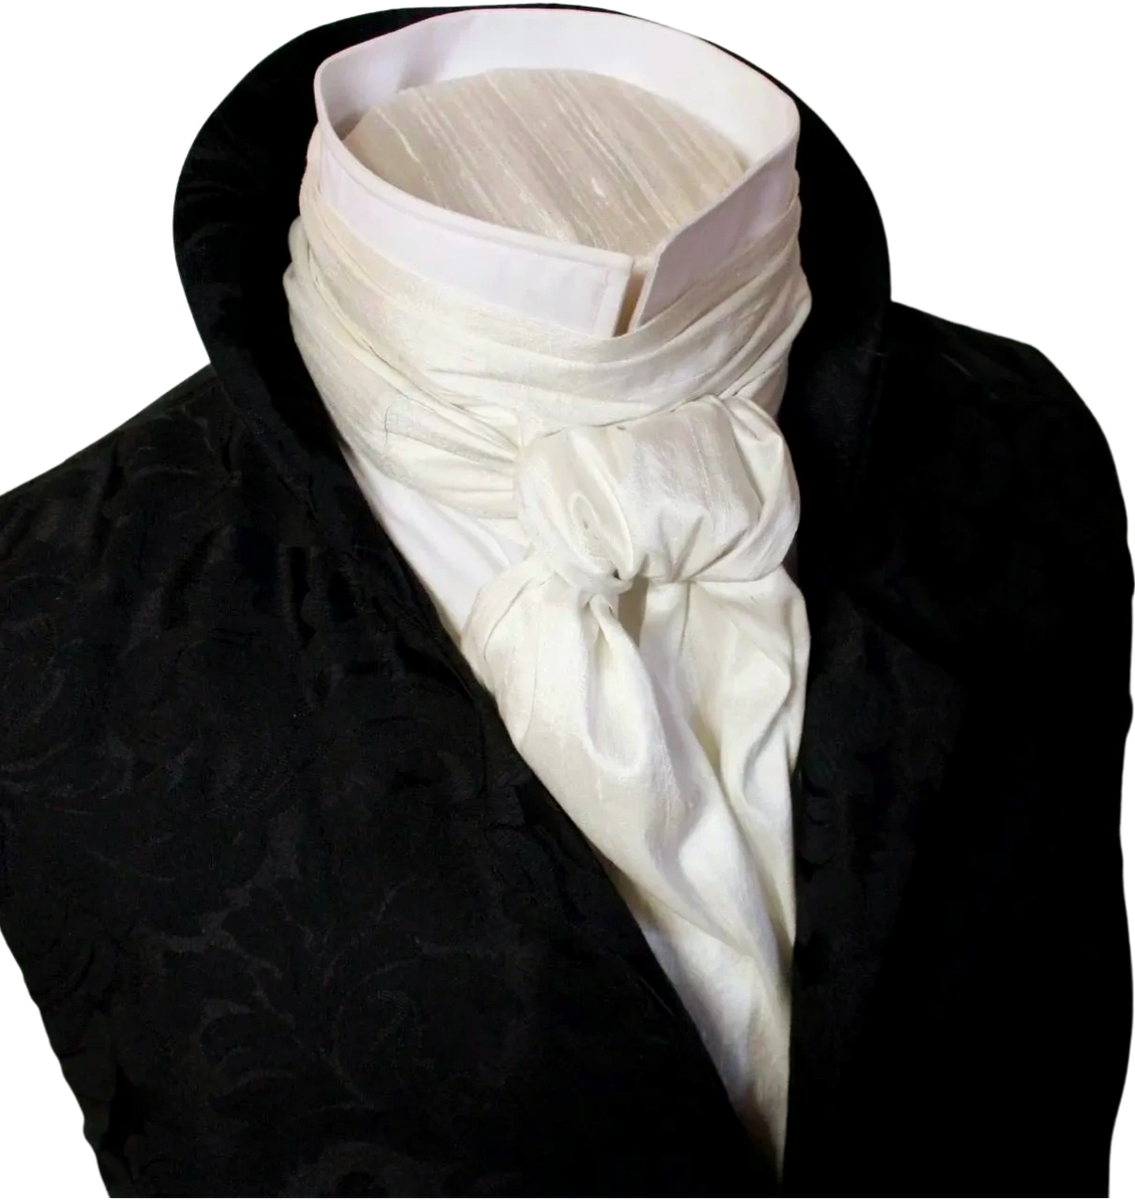 FORMAL Victorian Ascot Tie Cravat - Platinum Silver Dupioni SILK